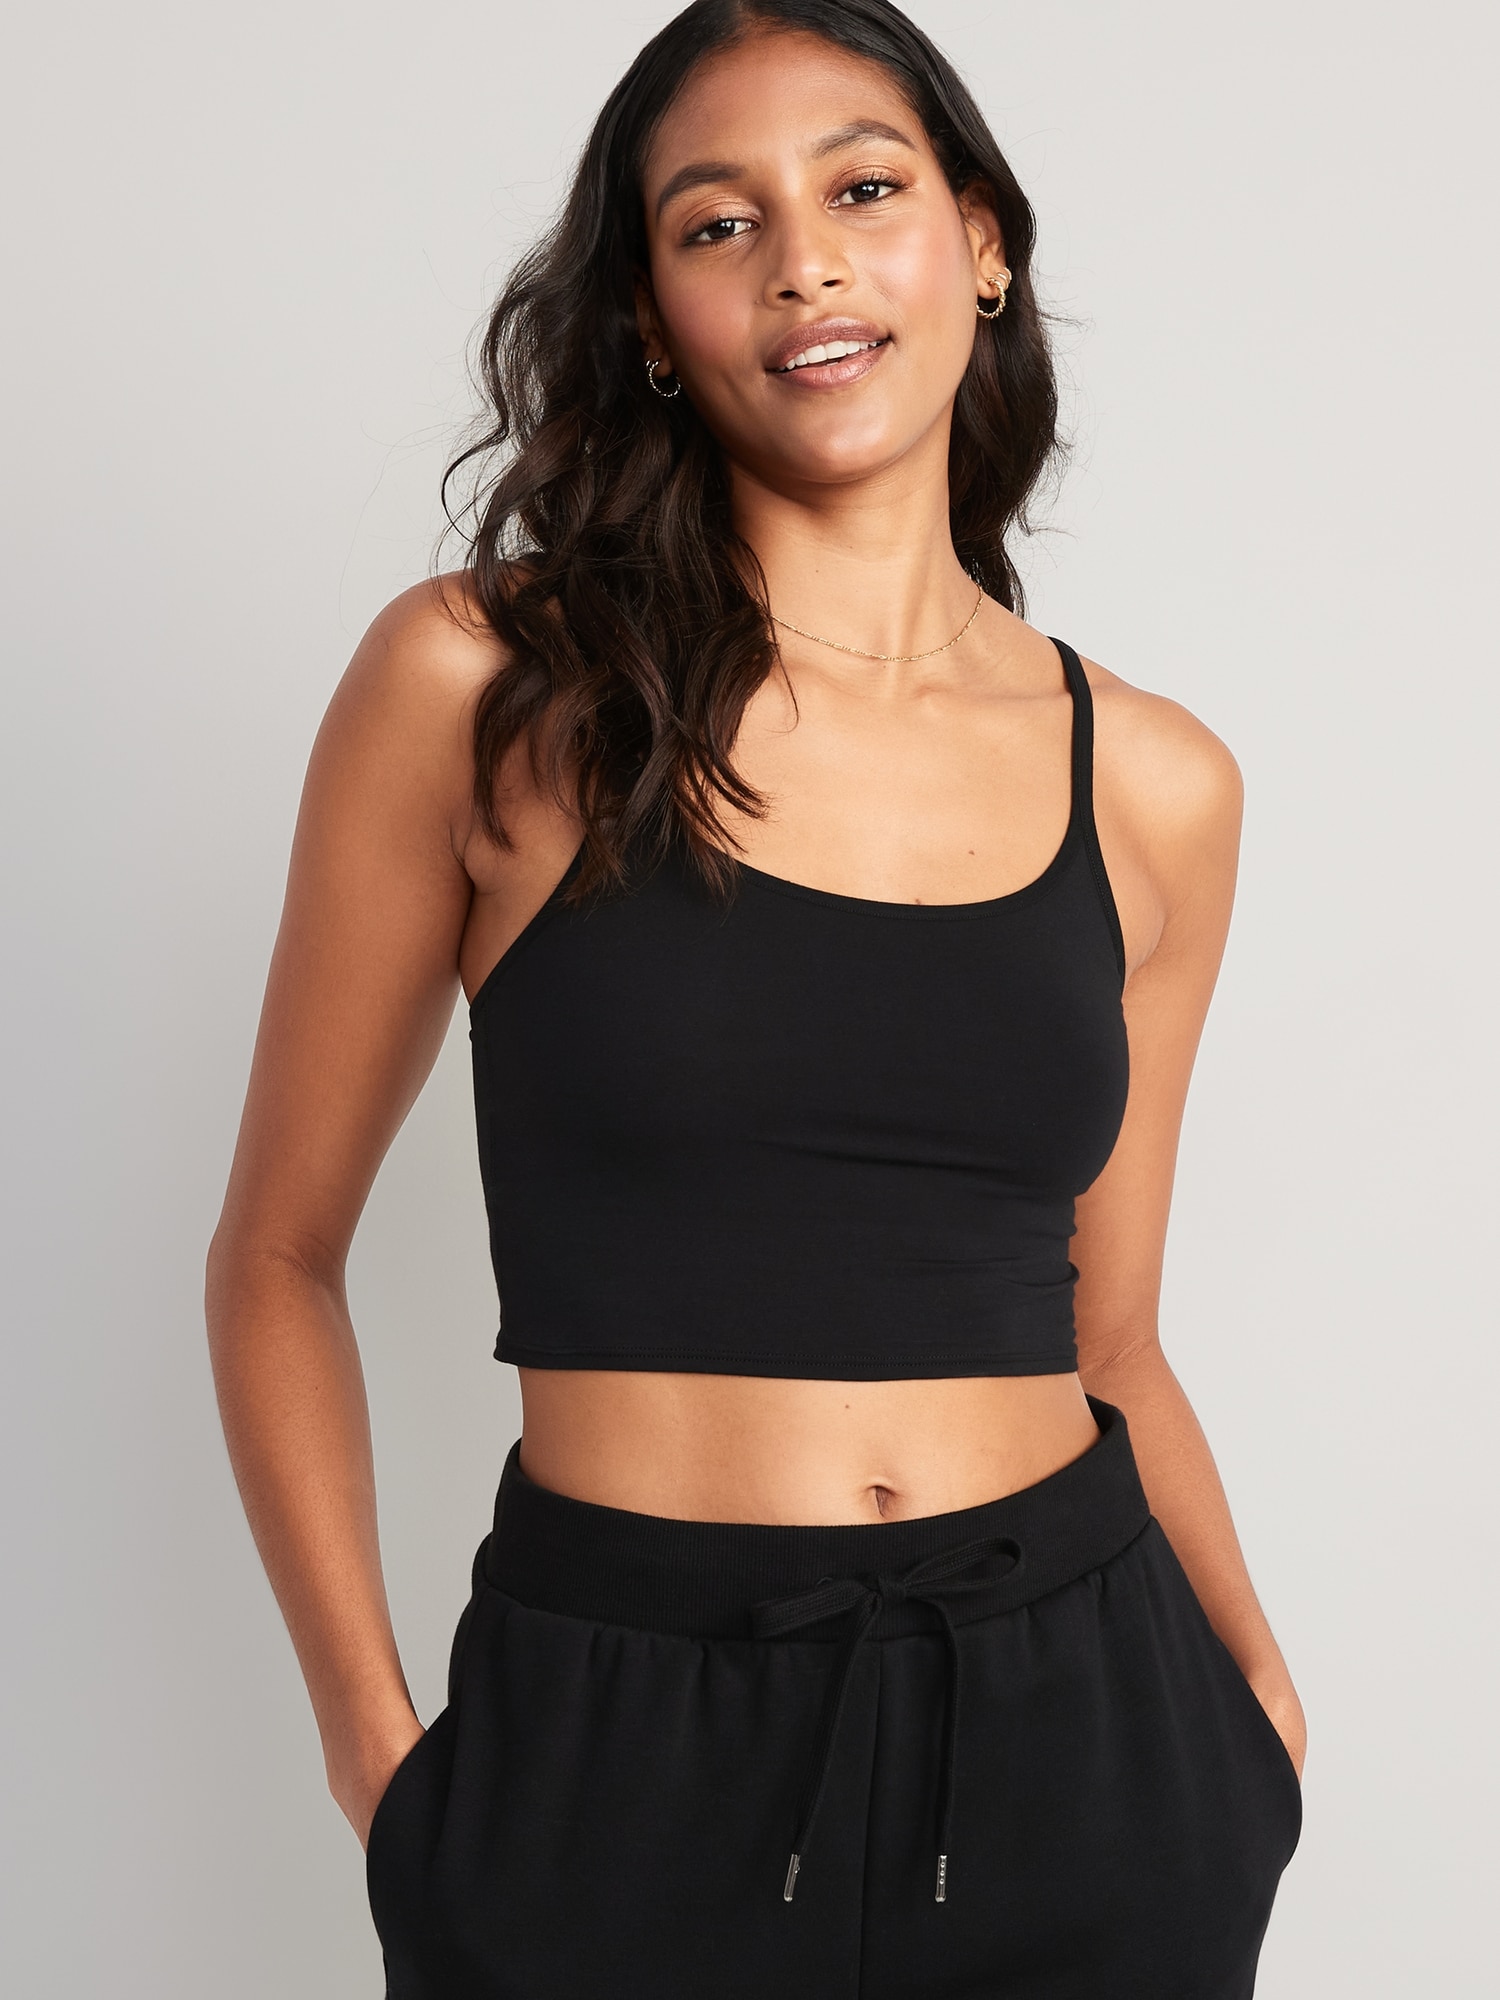 Buy Comfy Cami Bra for Women Crop Top Yoga Bralette Longline